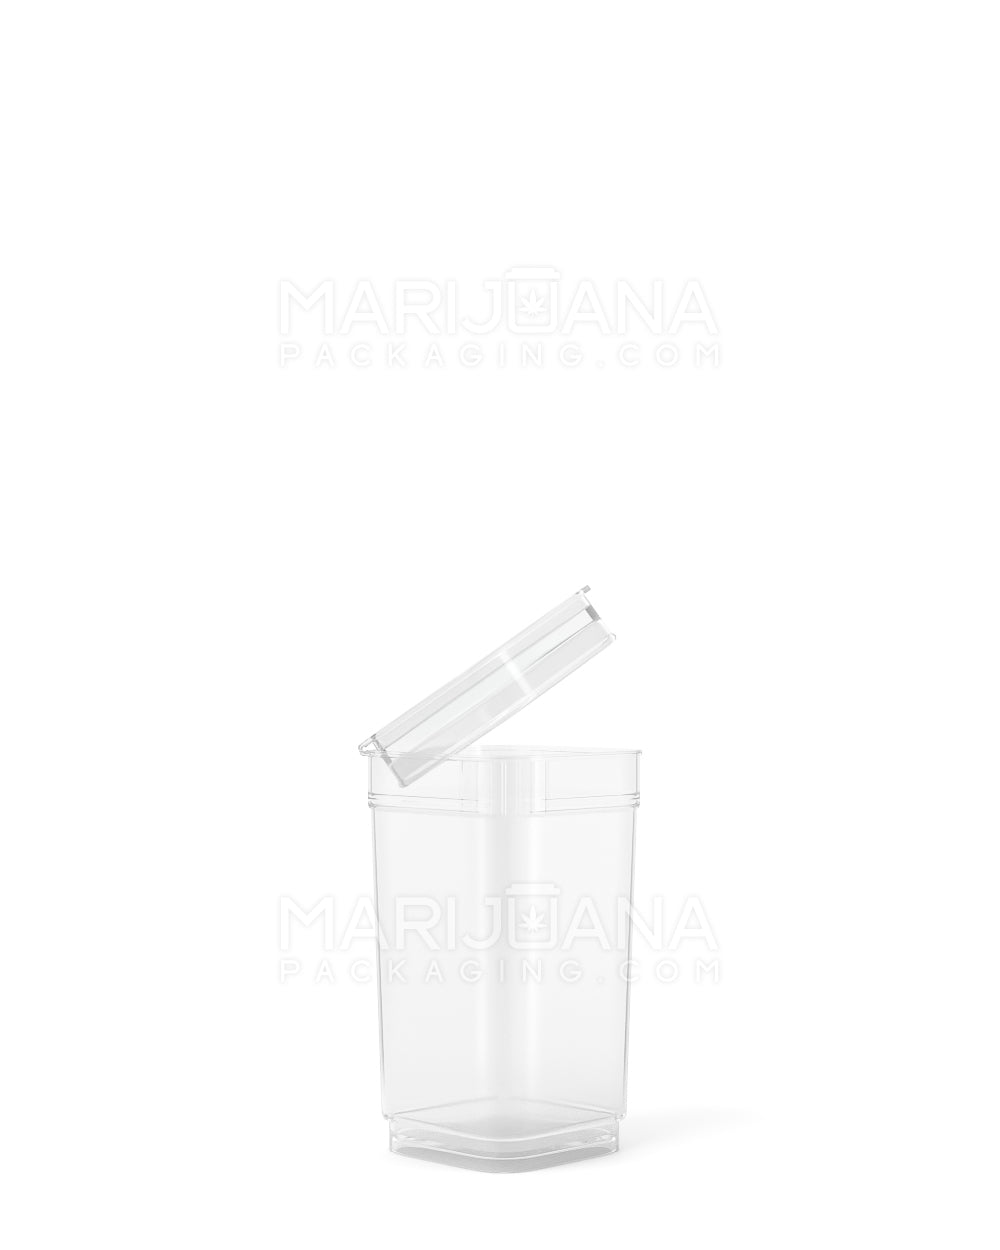 POLLEN GEAR | Child Resistant 100% Recyclable Transparent Clear Pop Box Pop Top Bottles | 13dr - 2.5g - 825 Count